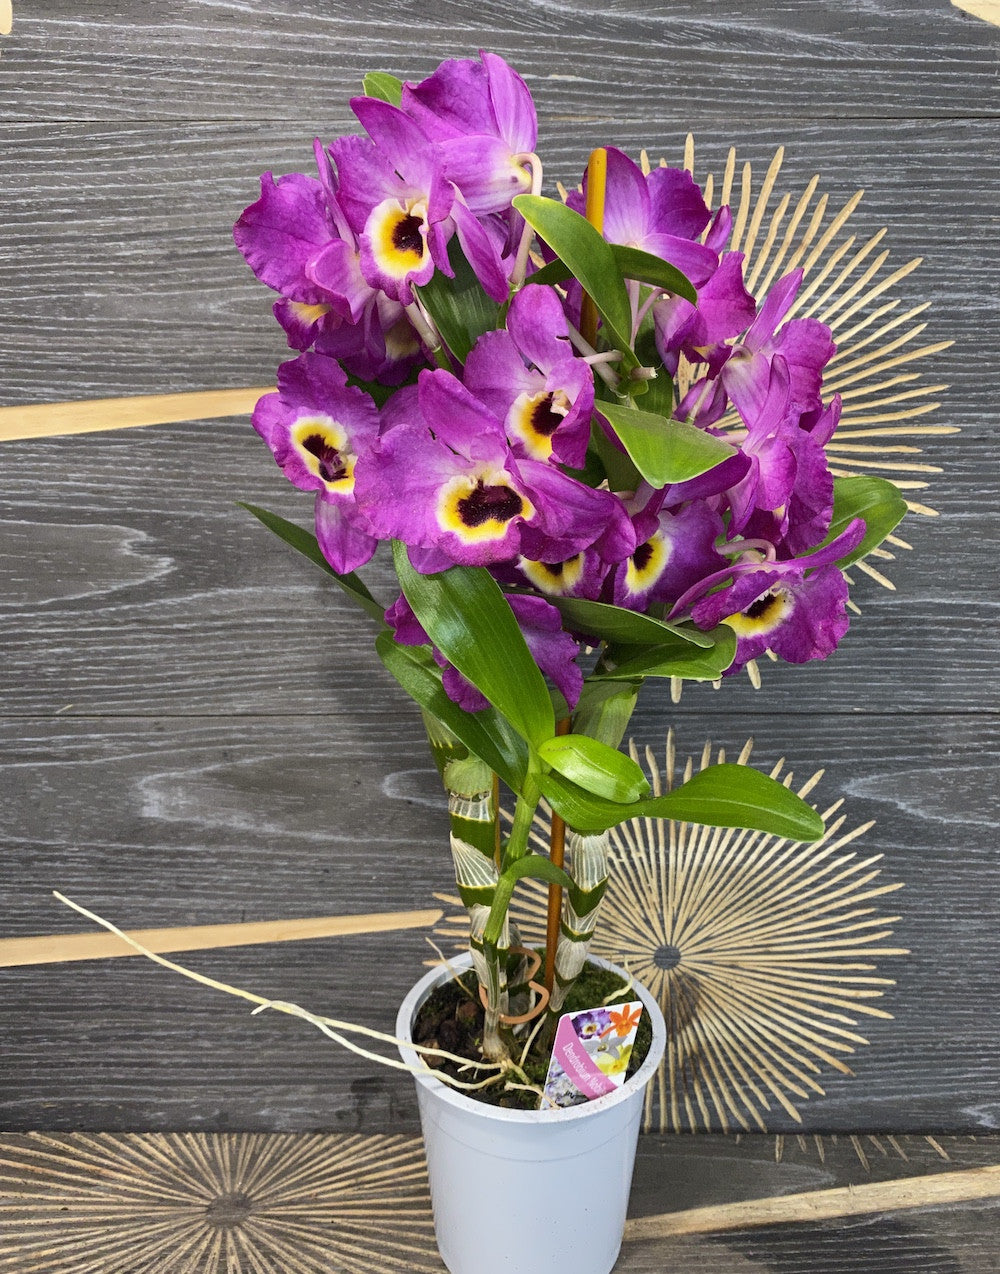 Cumpara online Orhidee Dendrobium mov cu cel mai bun pret, livrare rapida!